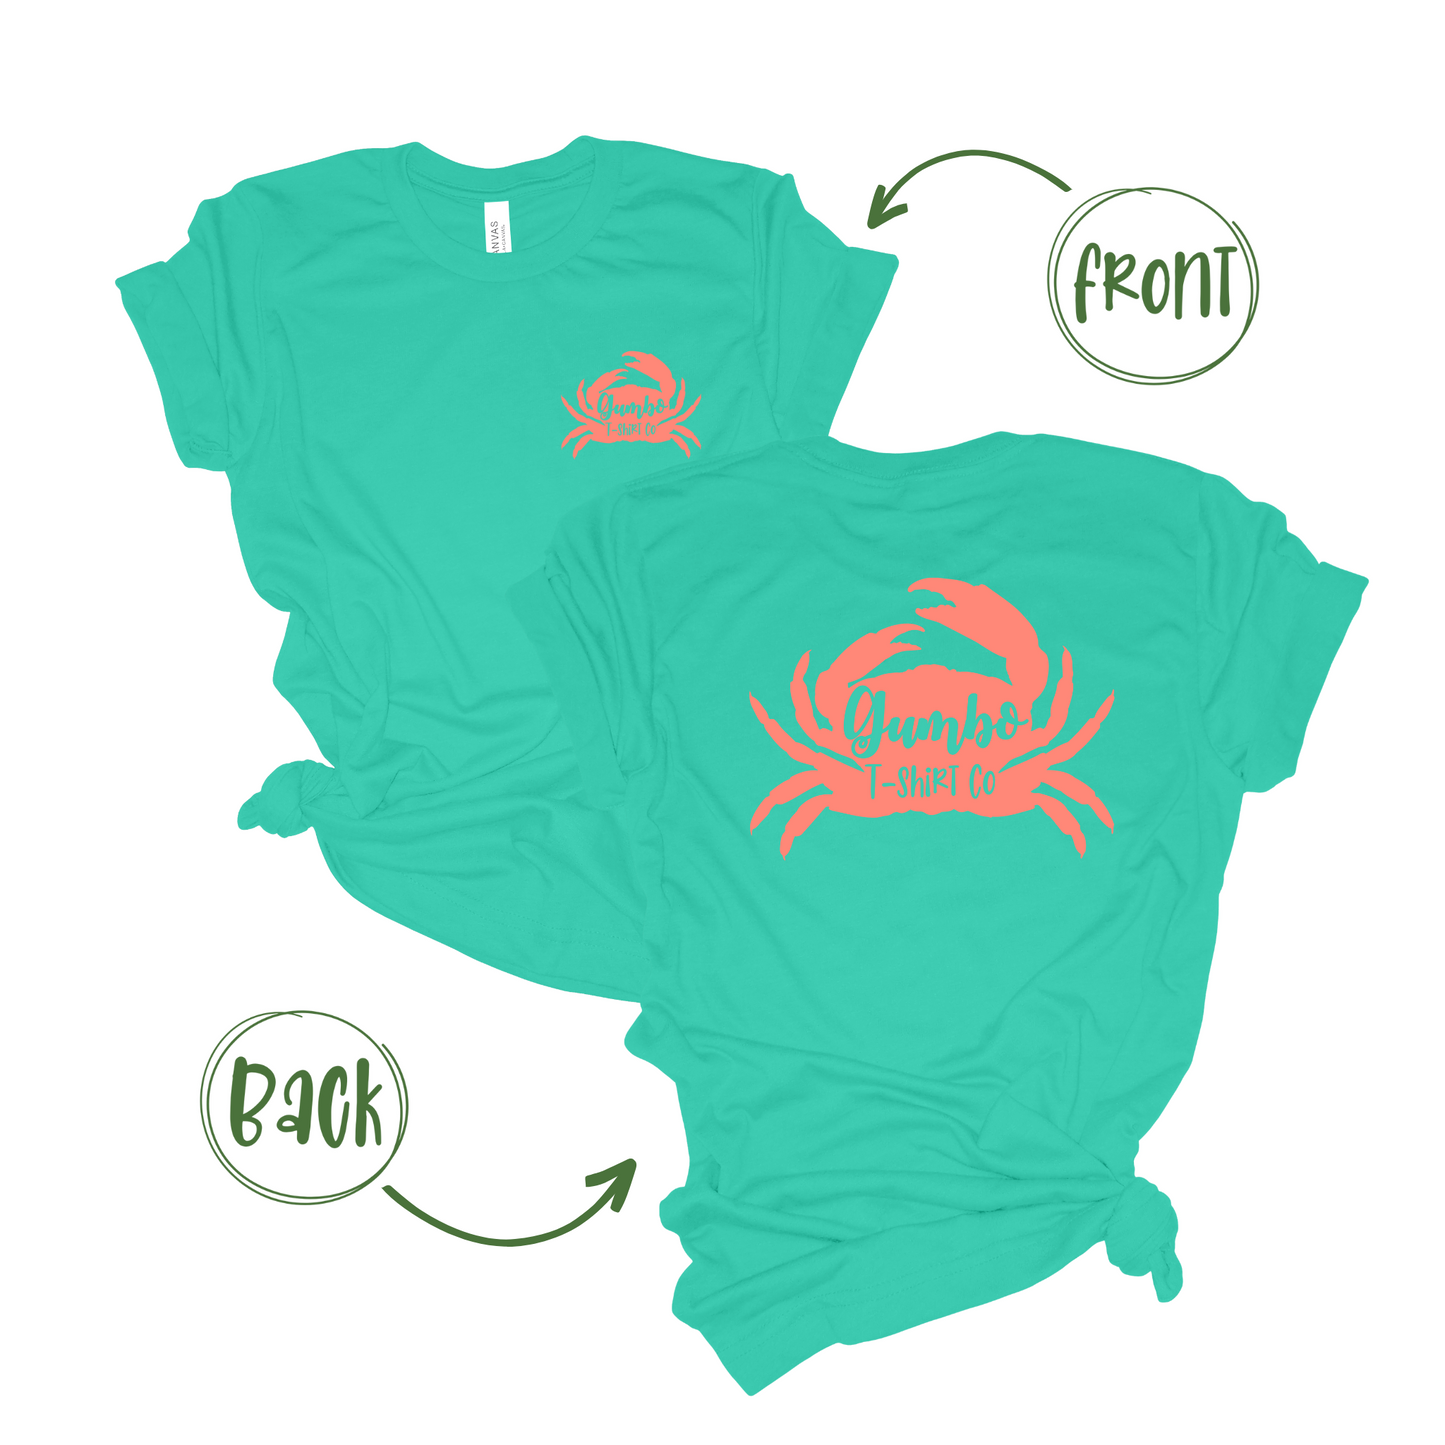 Teal Bella Canvas Tshirt- Gumbo T-shirt Co Crab Logo Shirt- Summer Shirt- Bella Canvas 3001- Louisiana Tourist T-shirt